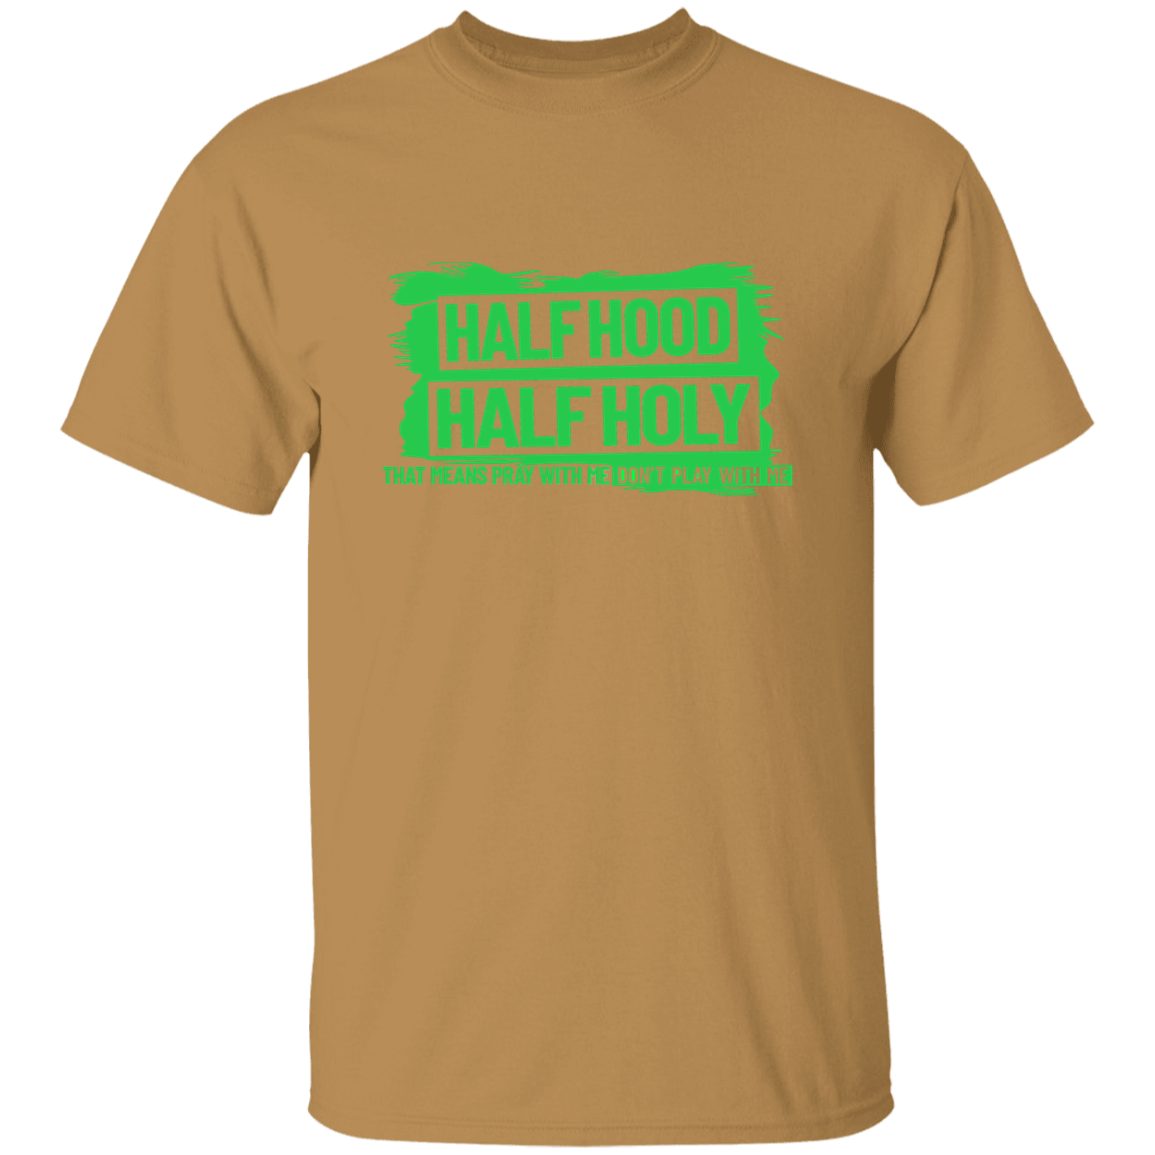 Half Hood Half Holy  T-Shirt